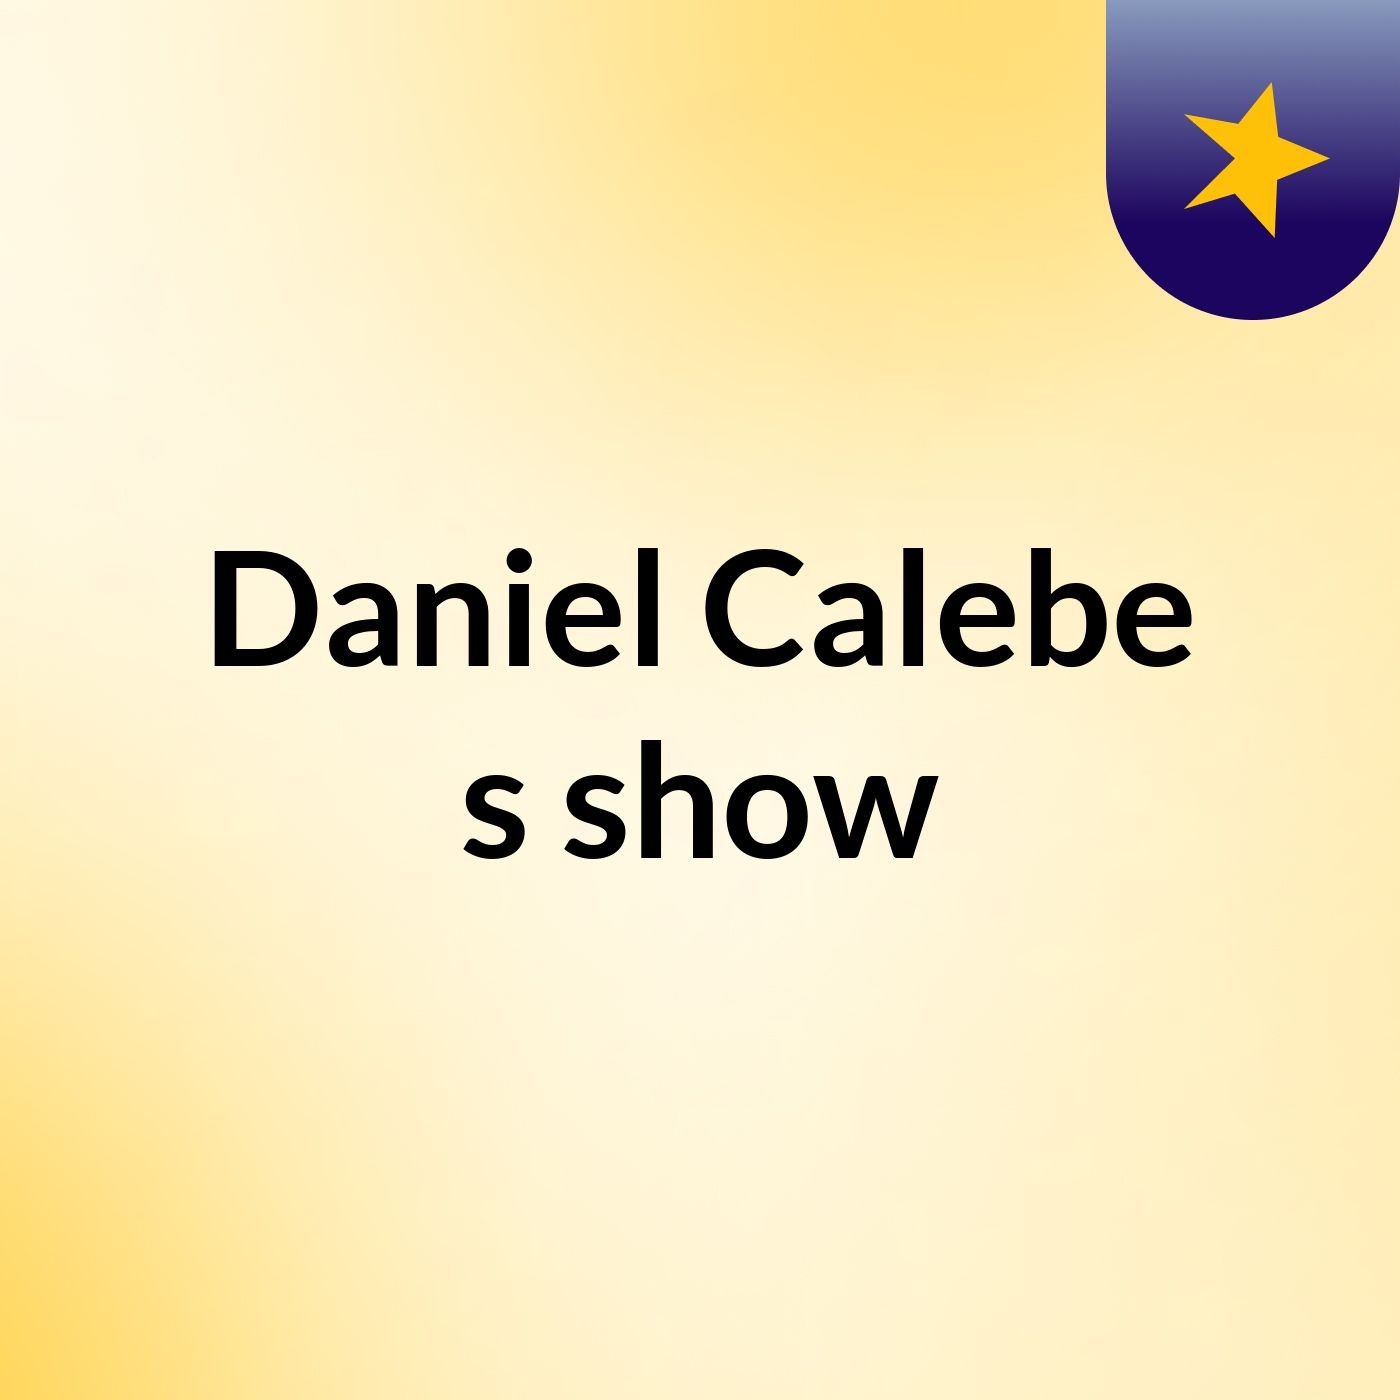 Daniel Calebe's show